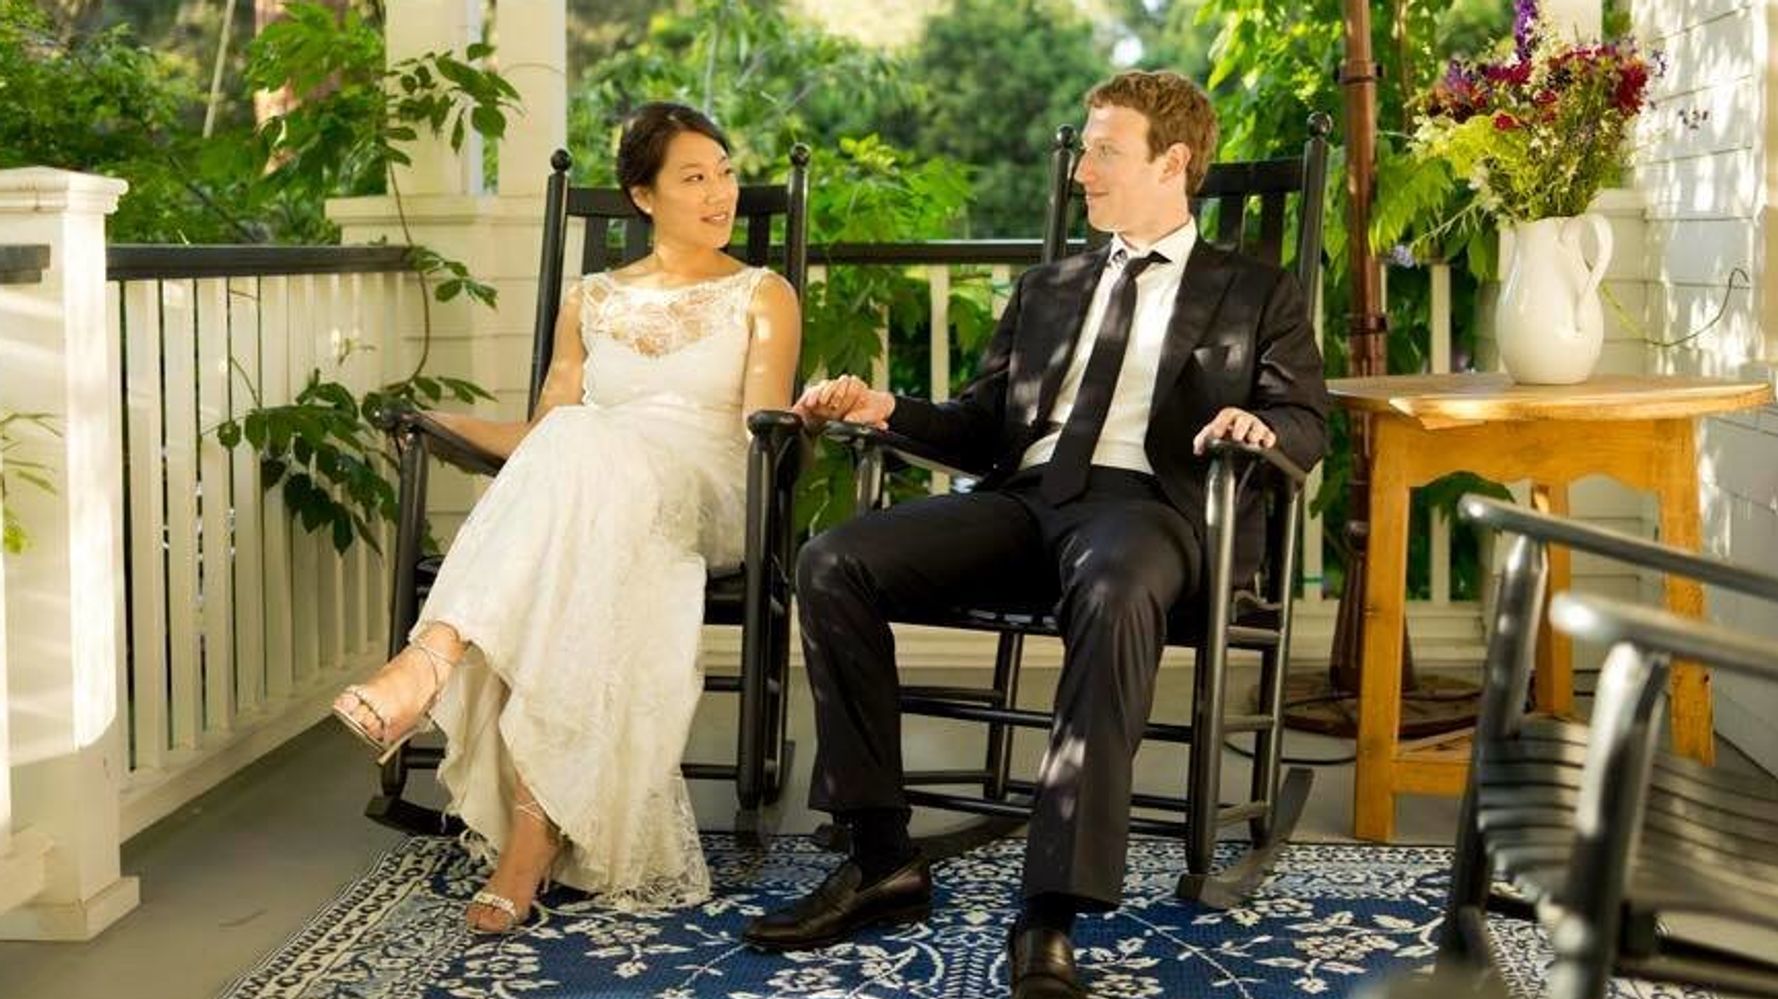 Mark Zuckerberg And Priscilla Chan Love Story